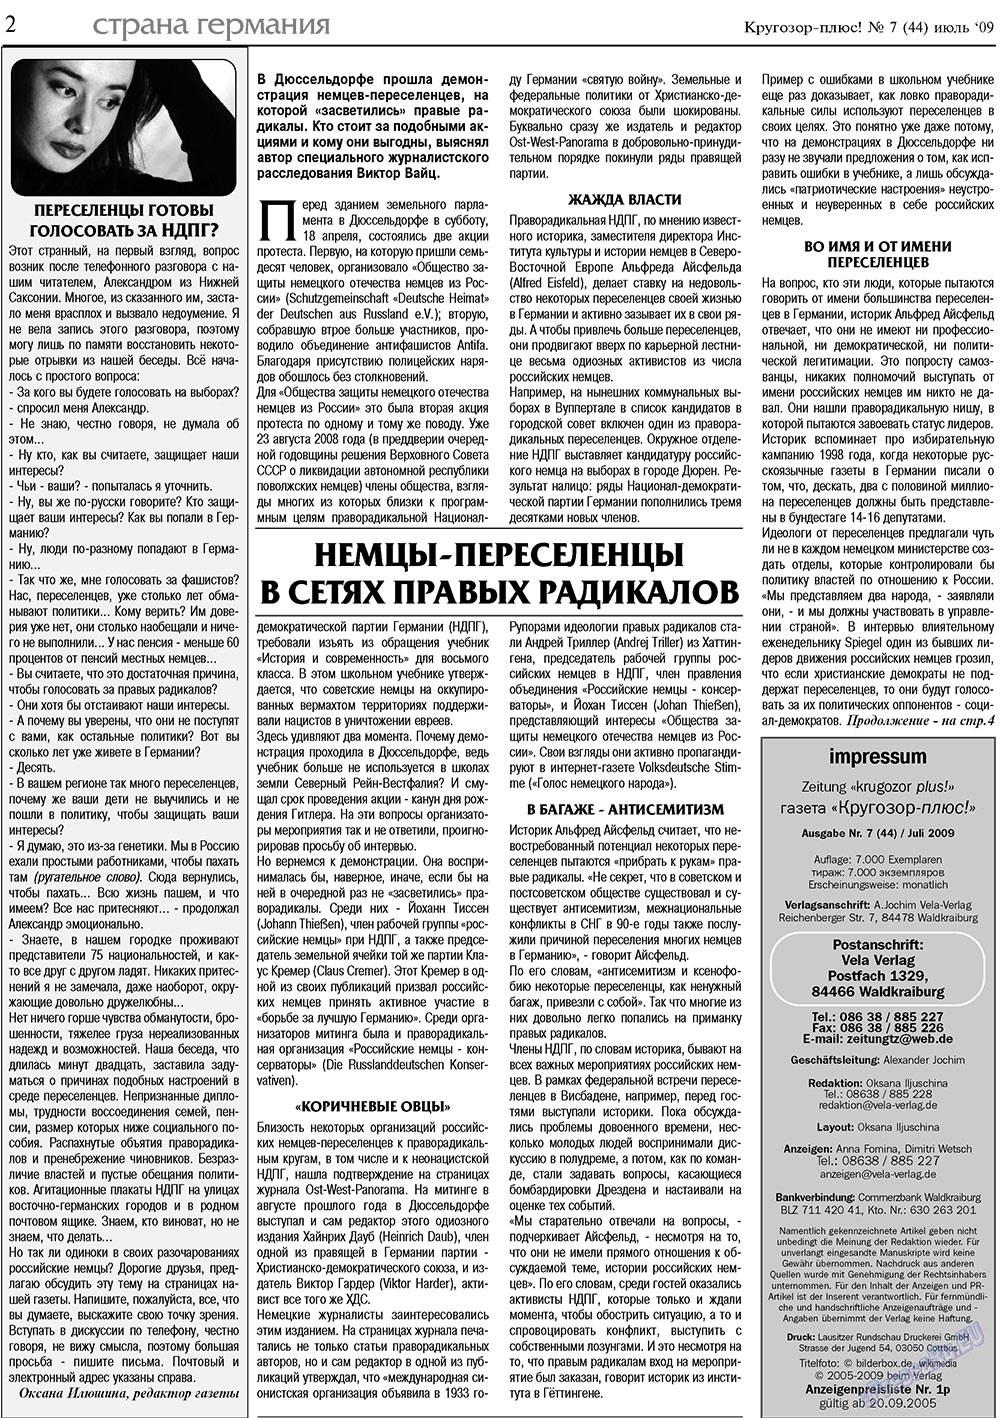 Кругозор плюс! (газета). 2009 год, номер 7, стр. 2